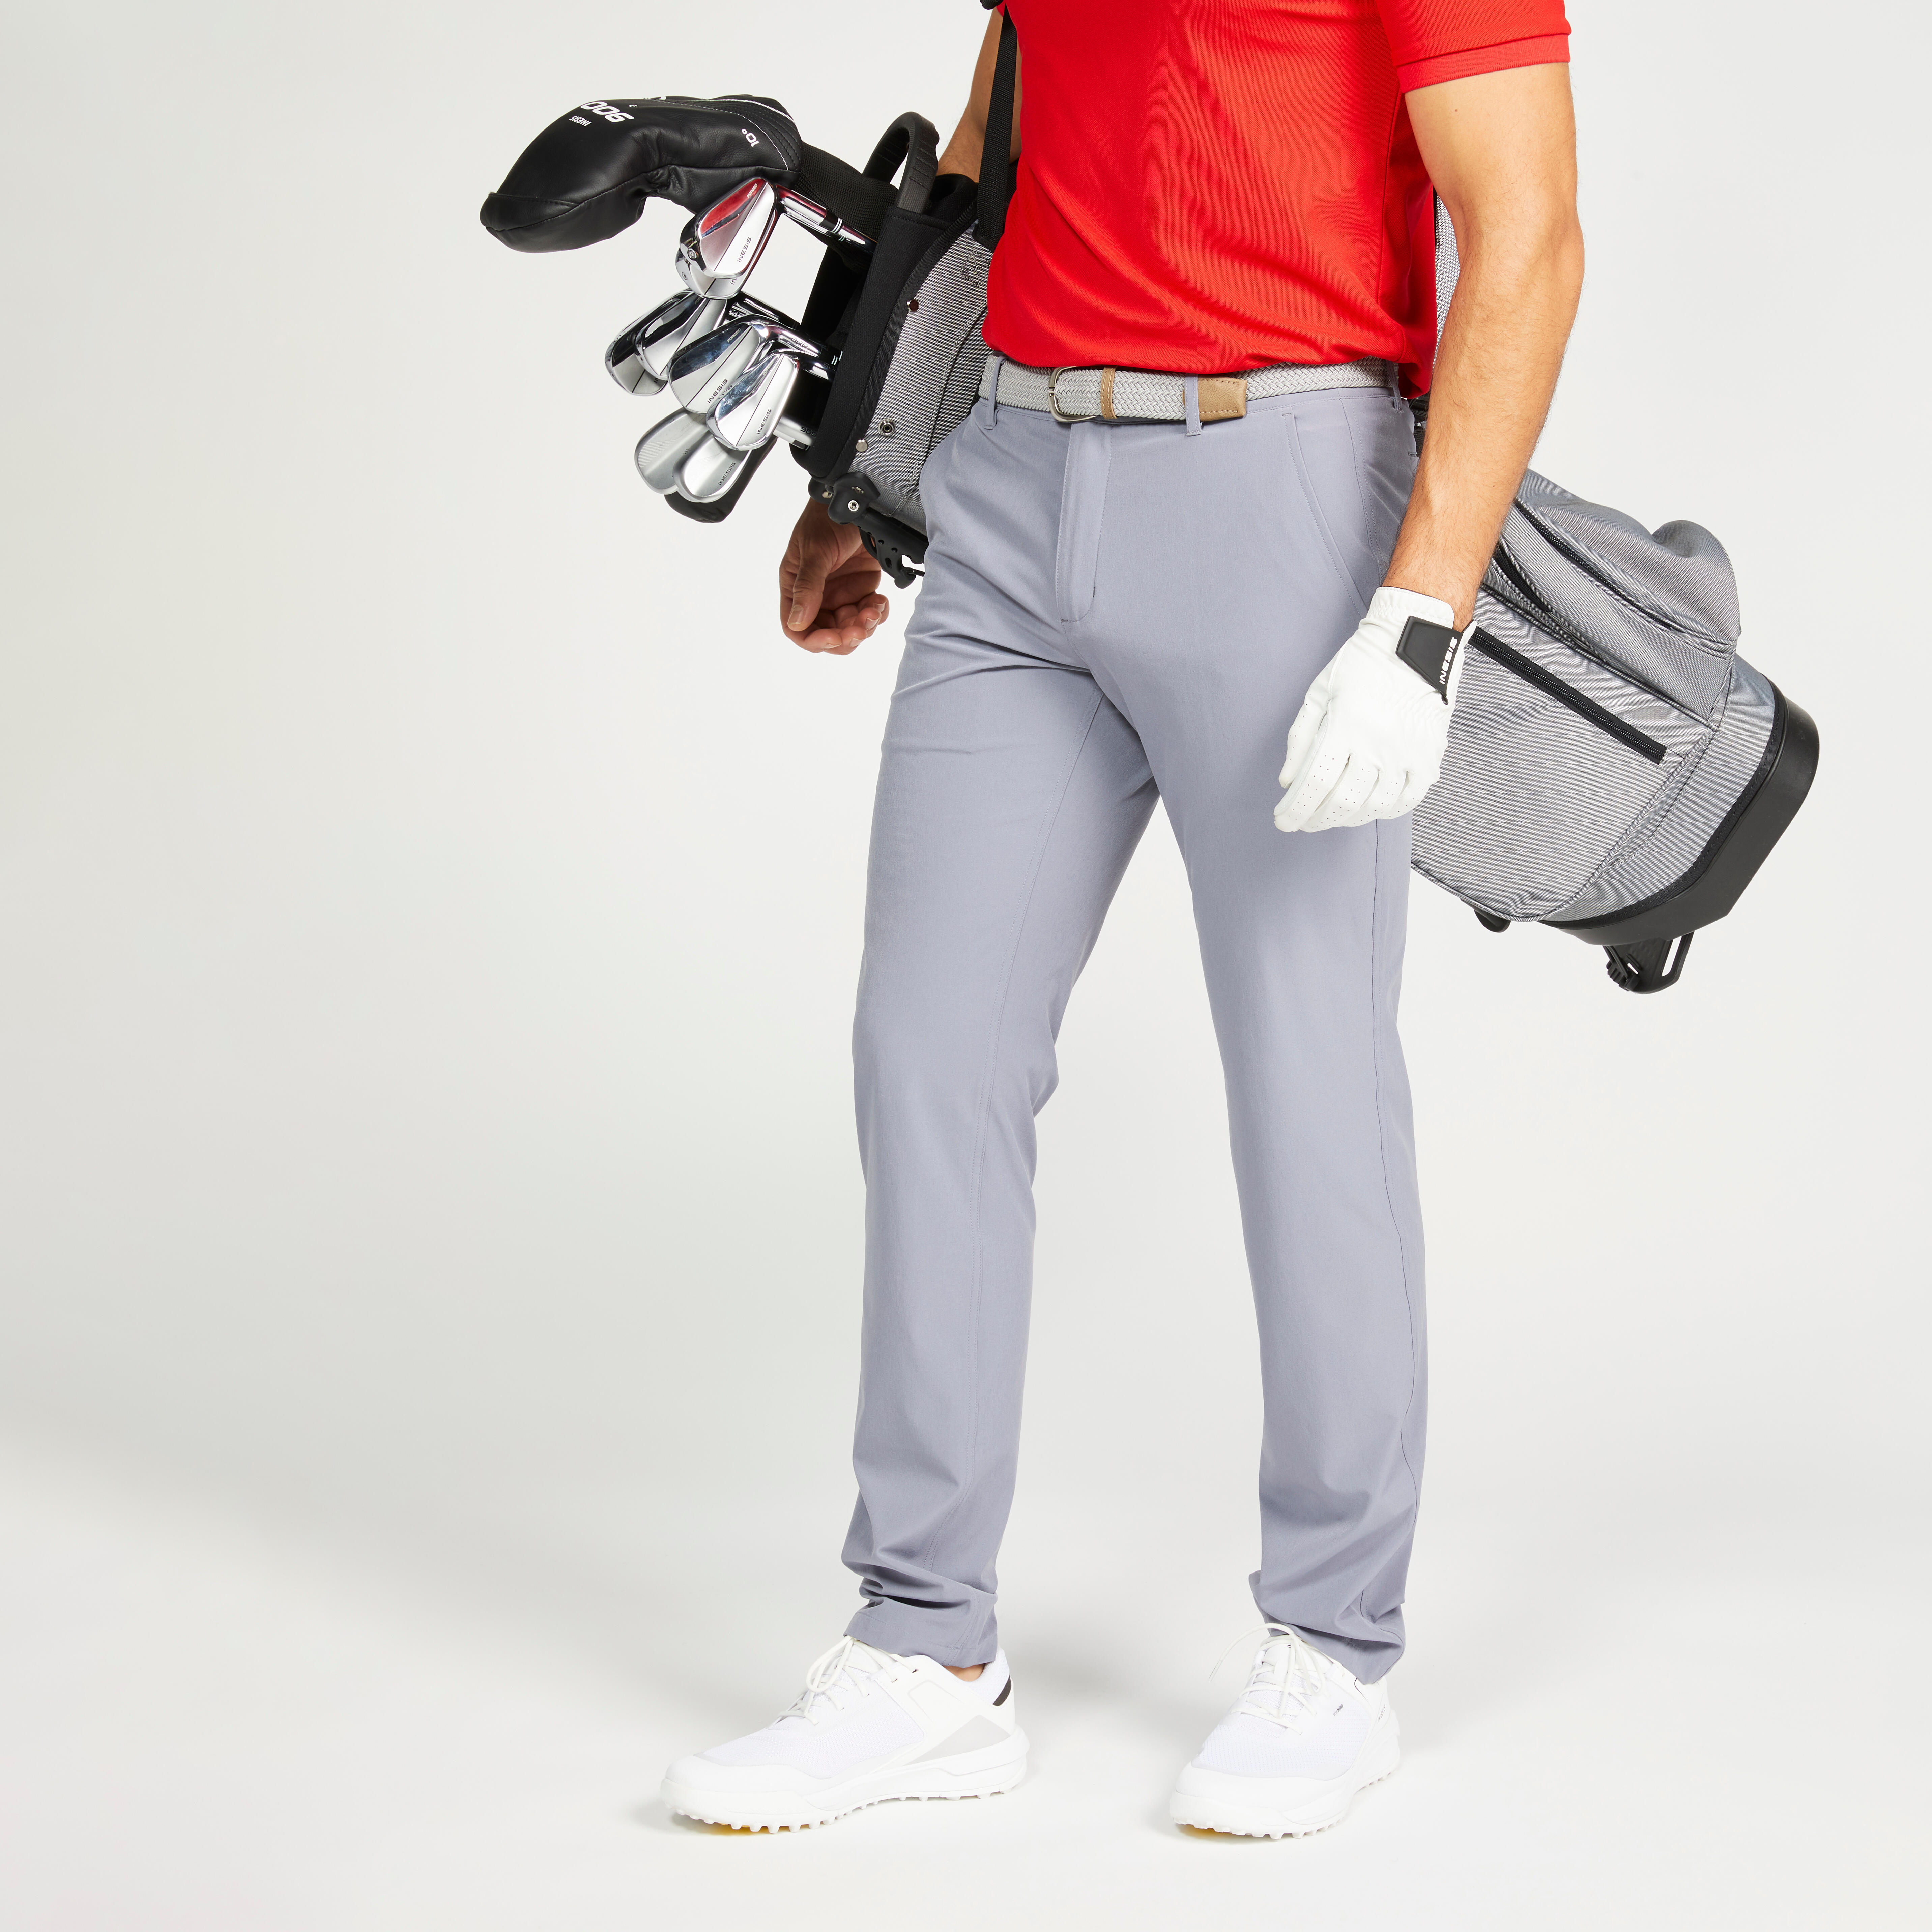 Men's Golf Pants - WW 500 Grey - Pebble grey - Inesis - Decathlon